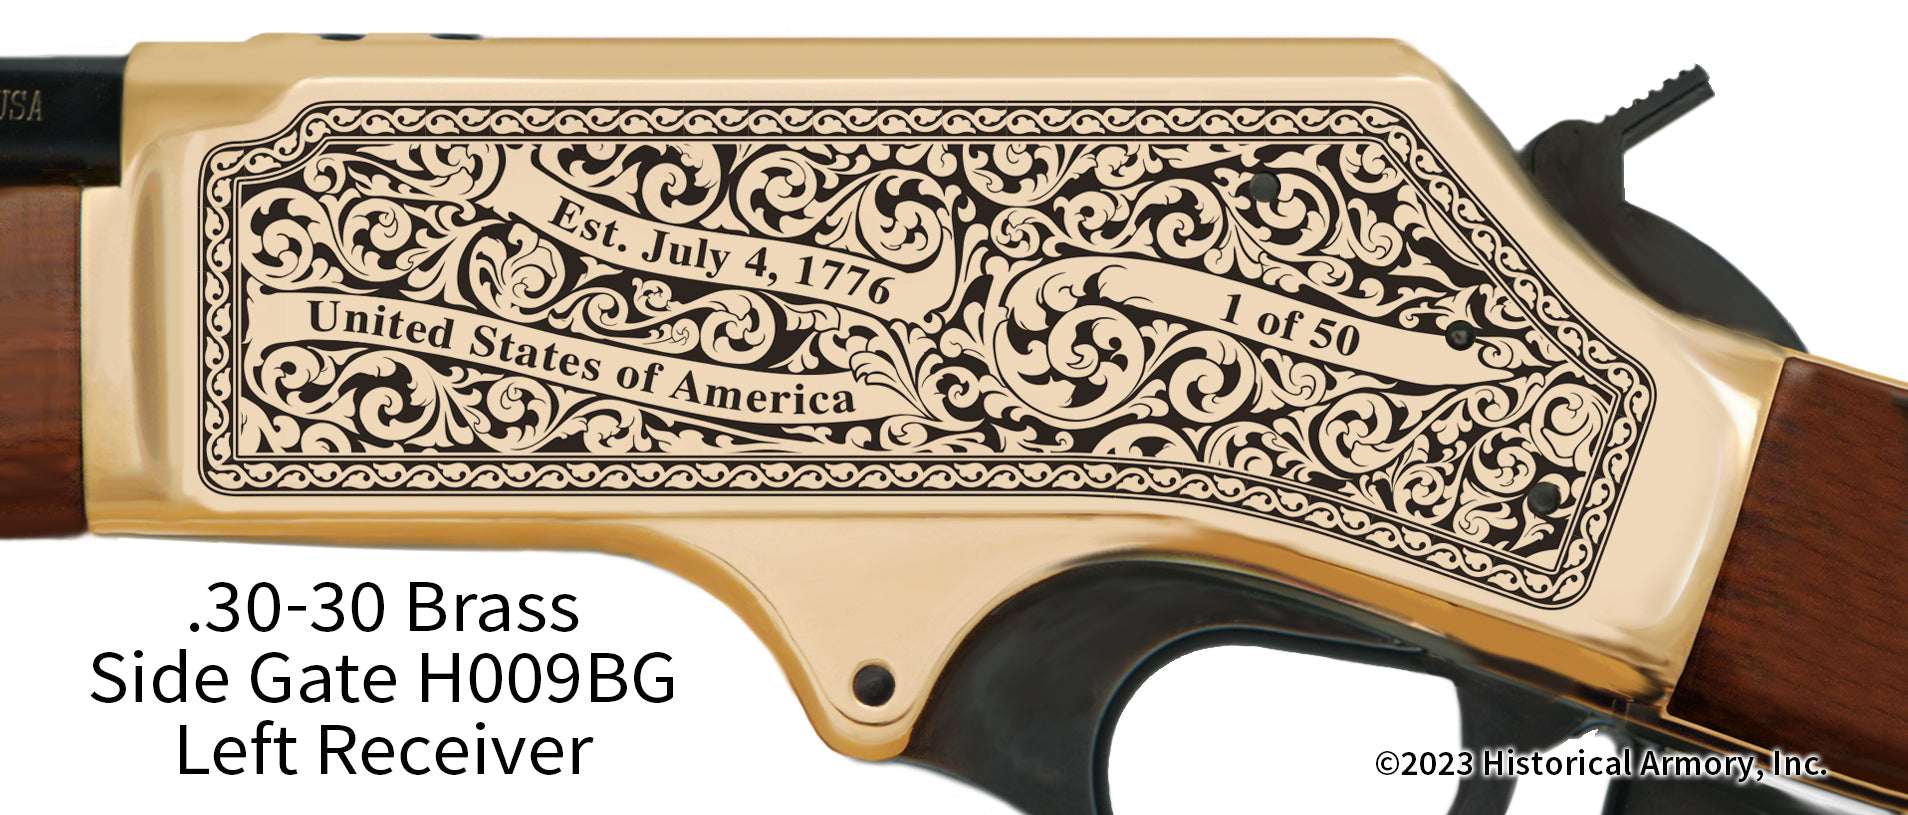 Calaveras County California Engraved Henry .30-30 Brass Side Gate Rifle